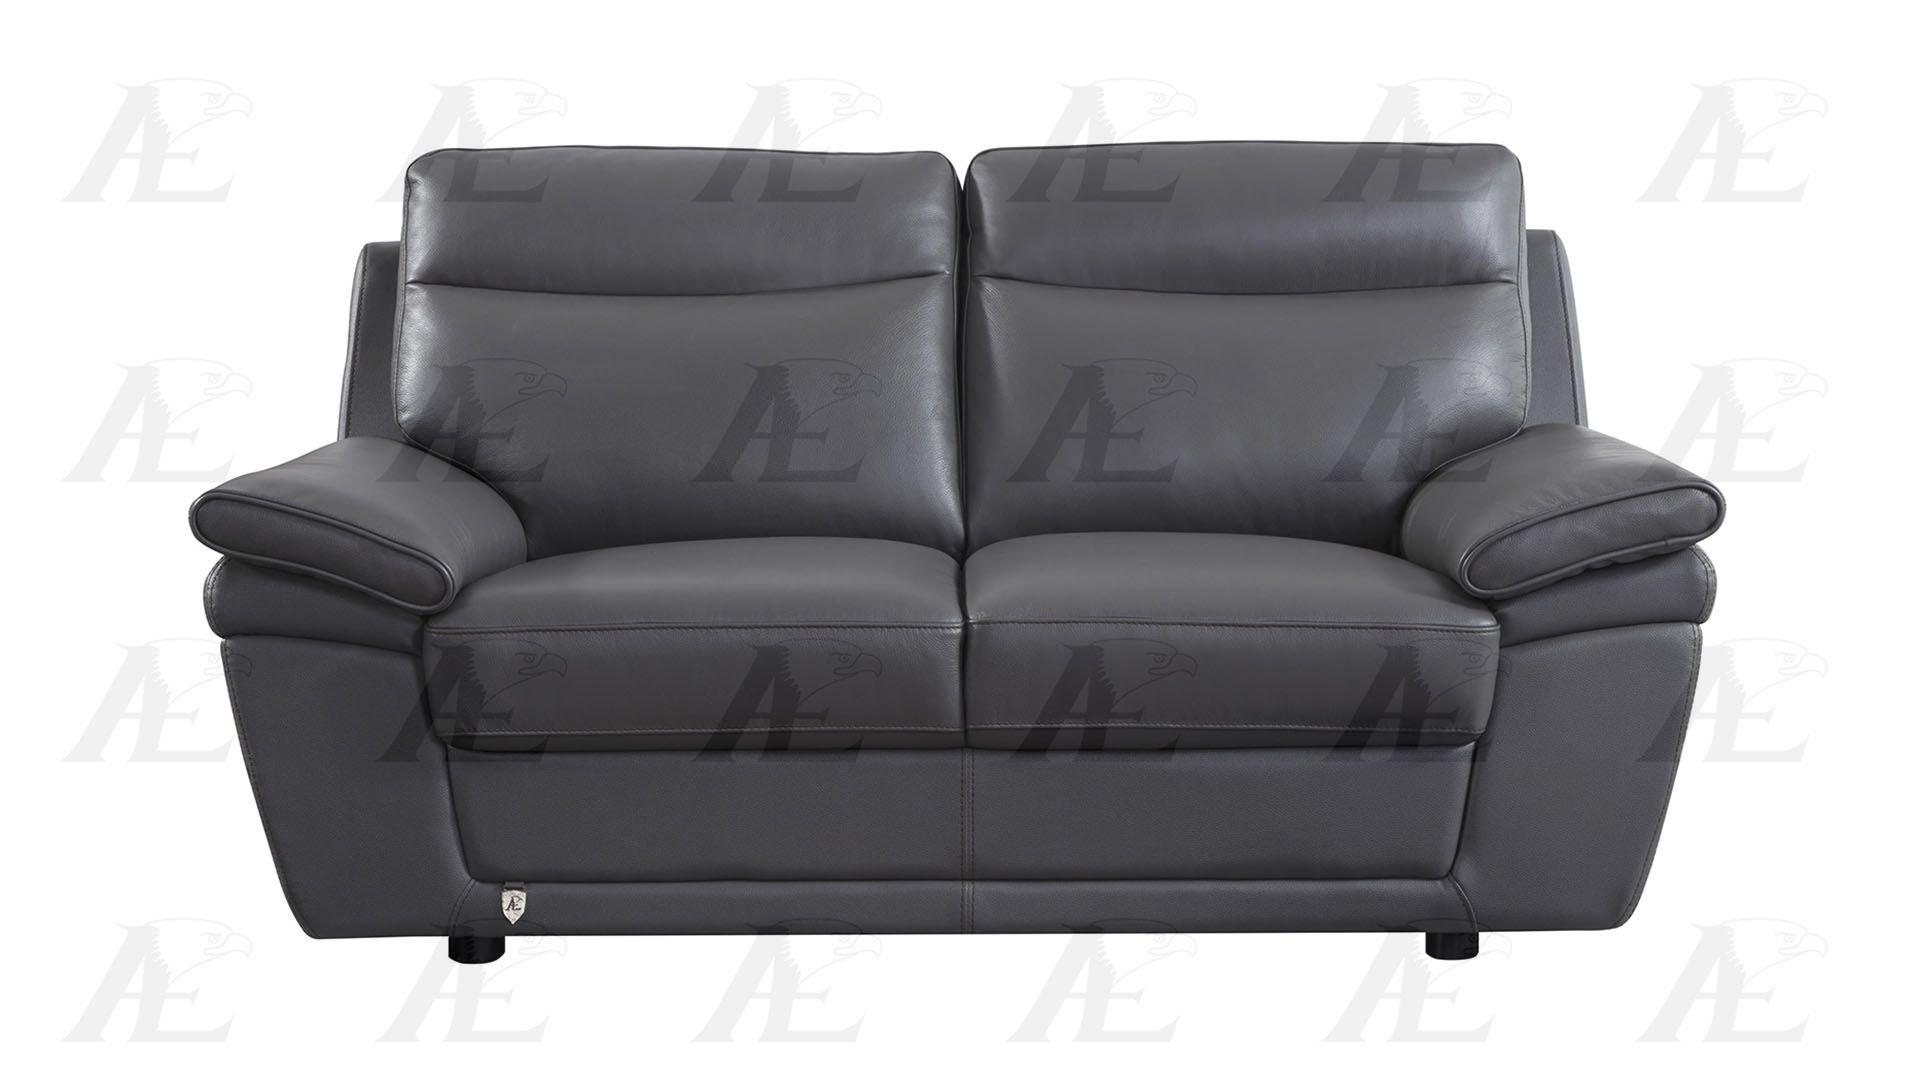 

    
EK092-GR-LS American Eagle Furniture Loveseat
